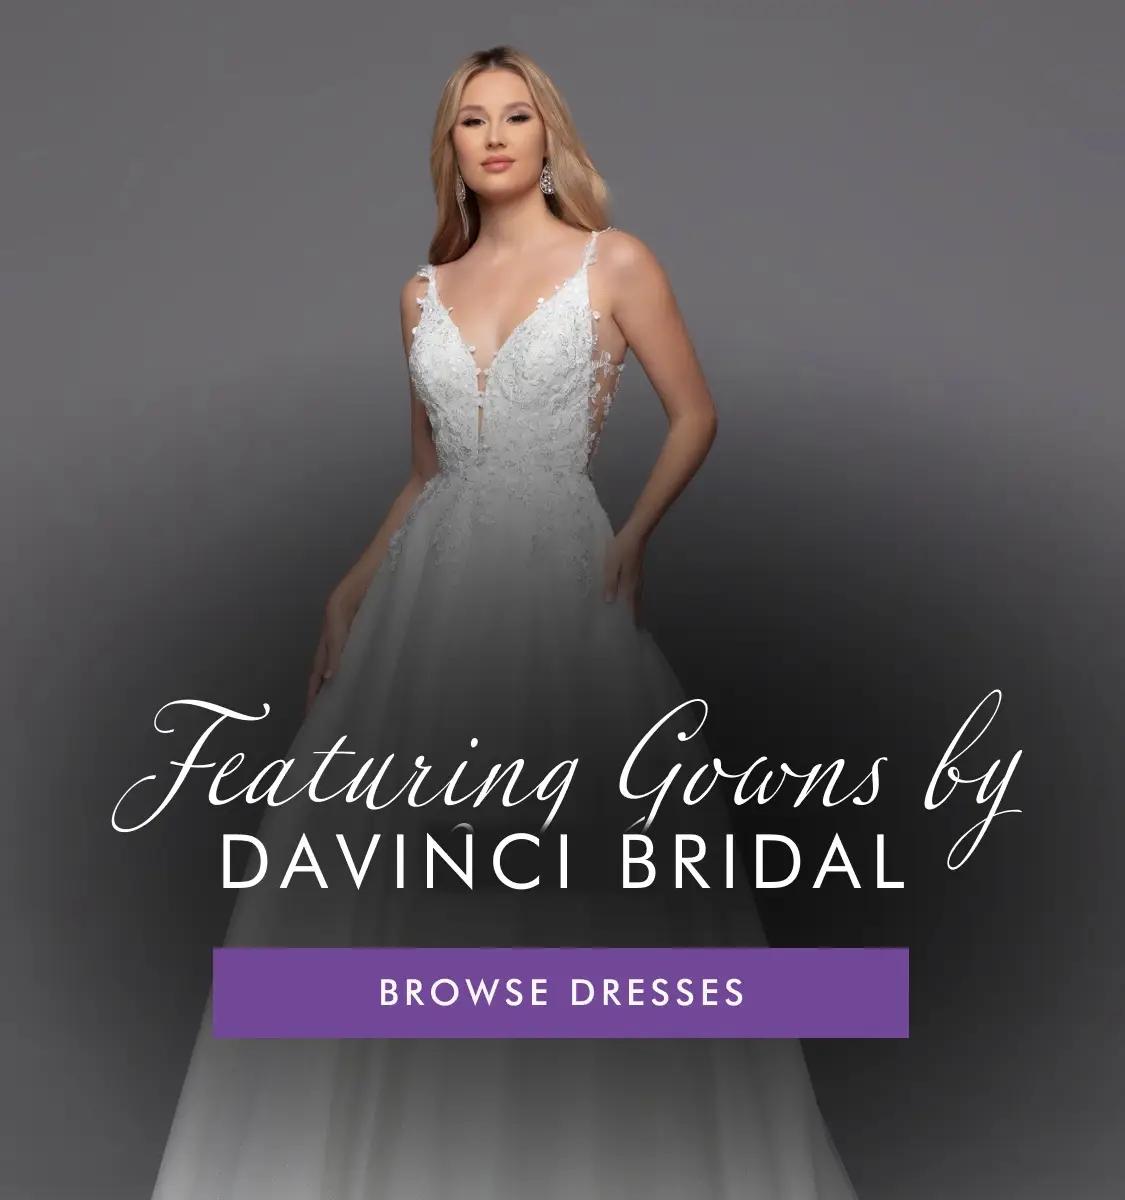 Mobile banner featuring Davinci Bridal dresses